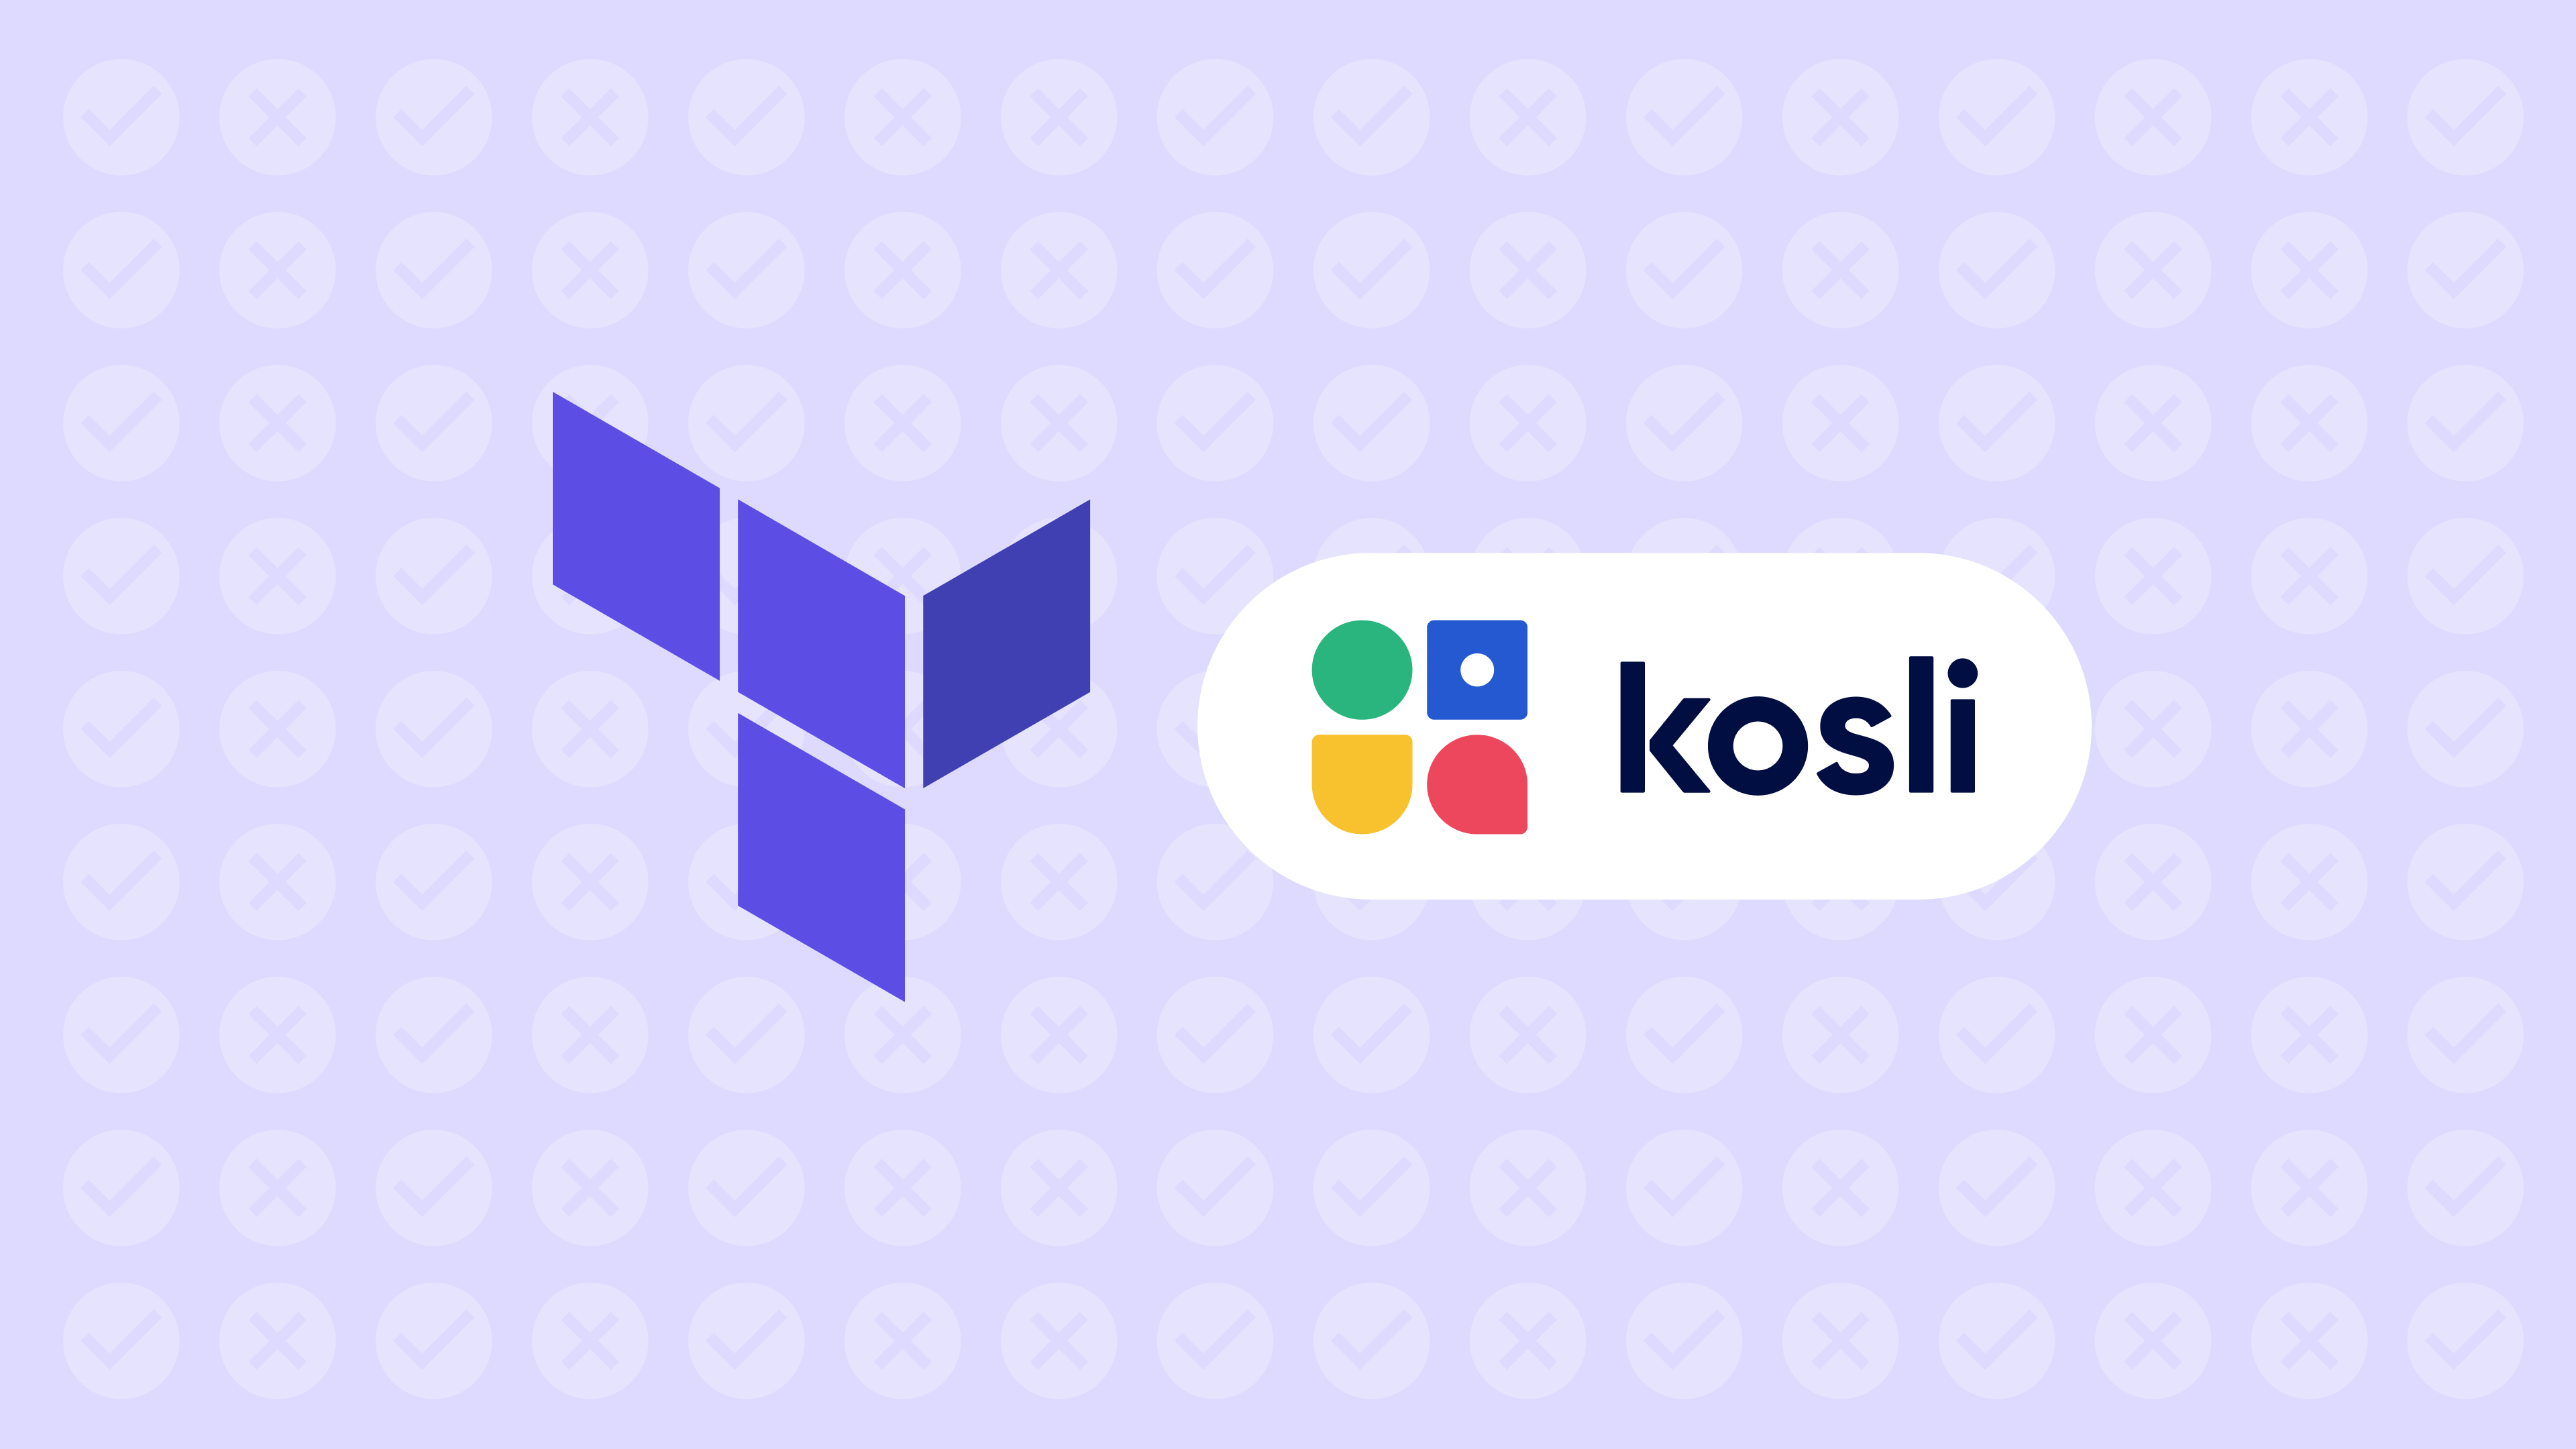 Terraform and Kosli logos together